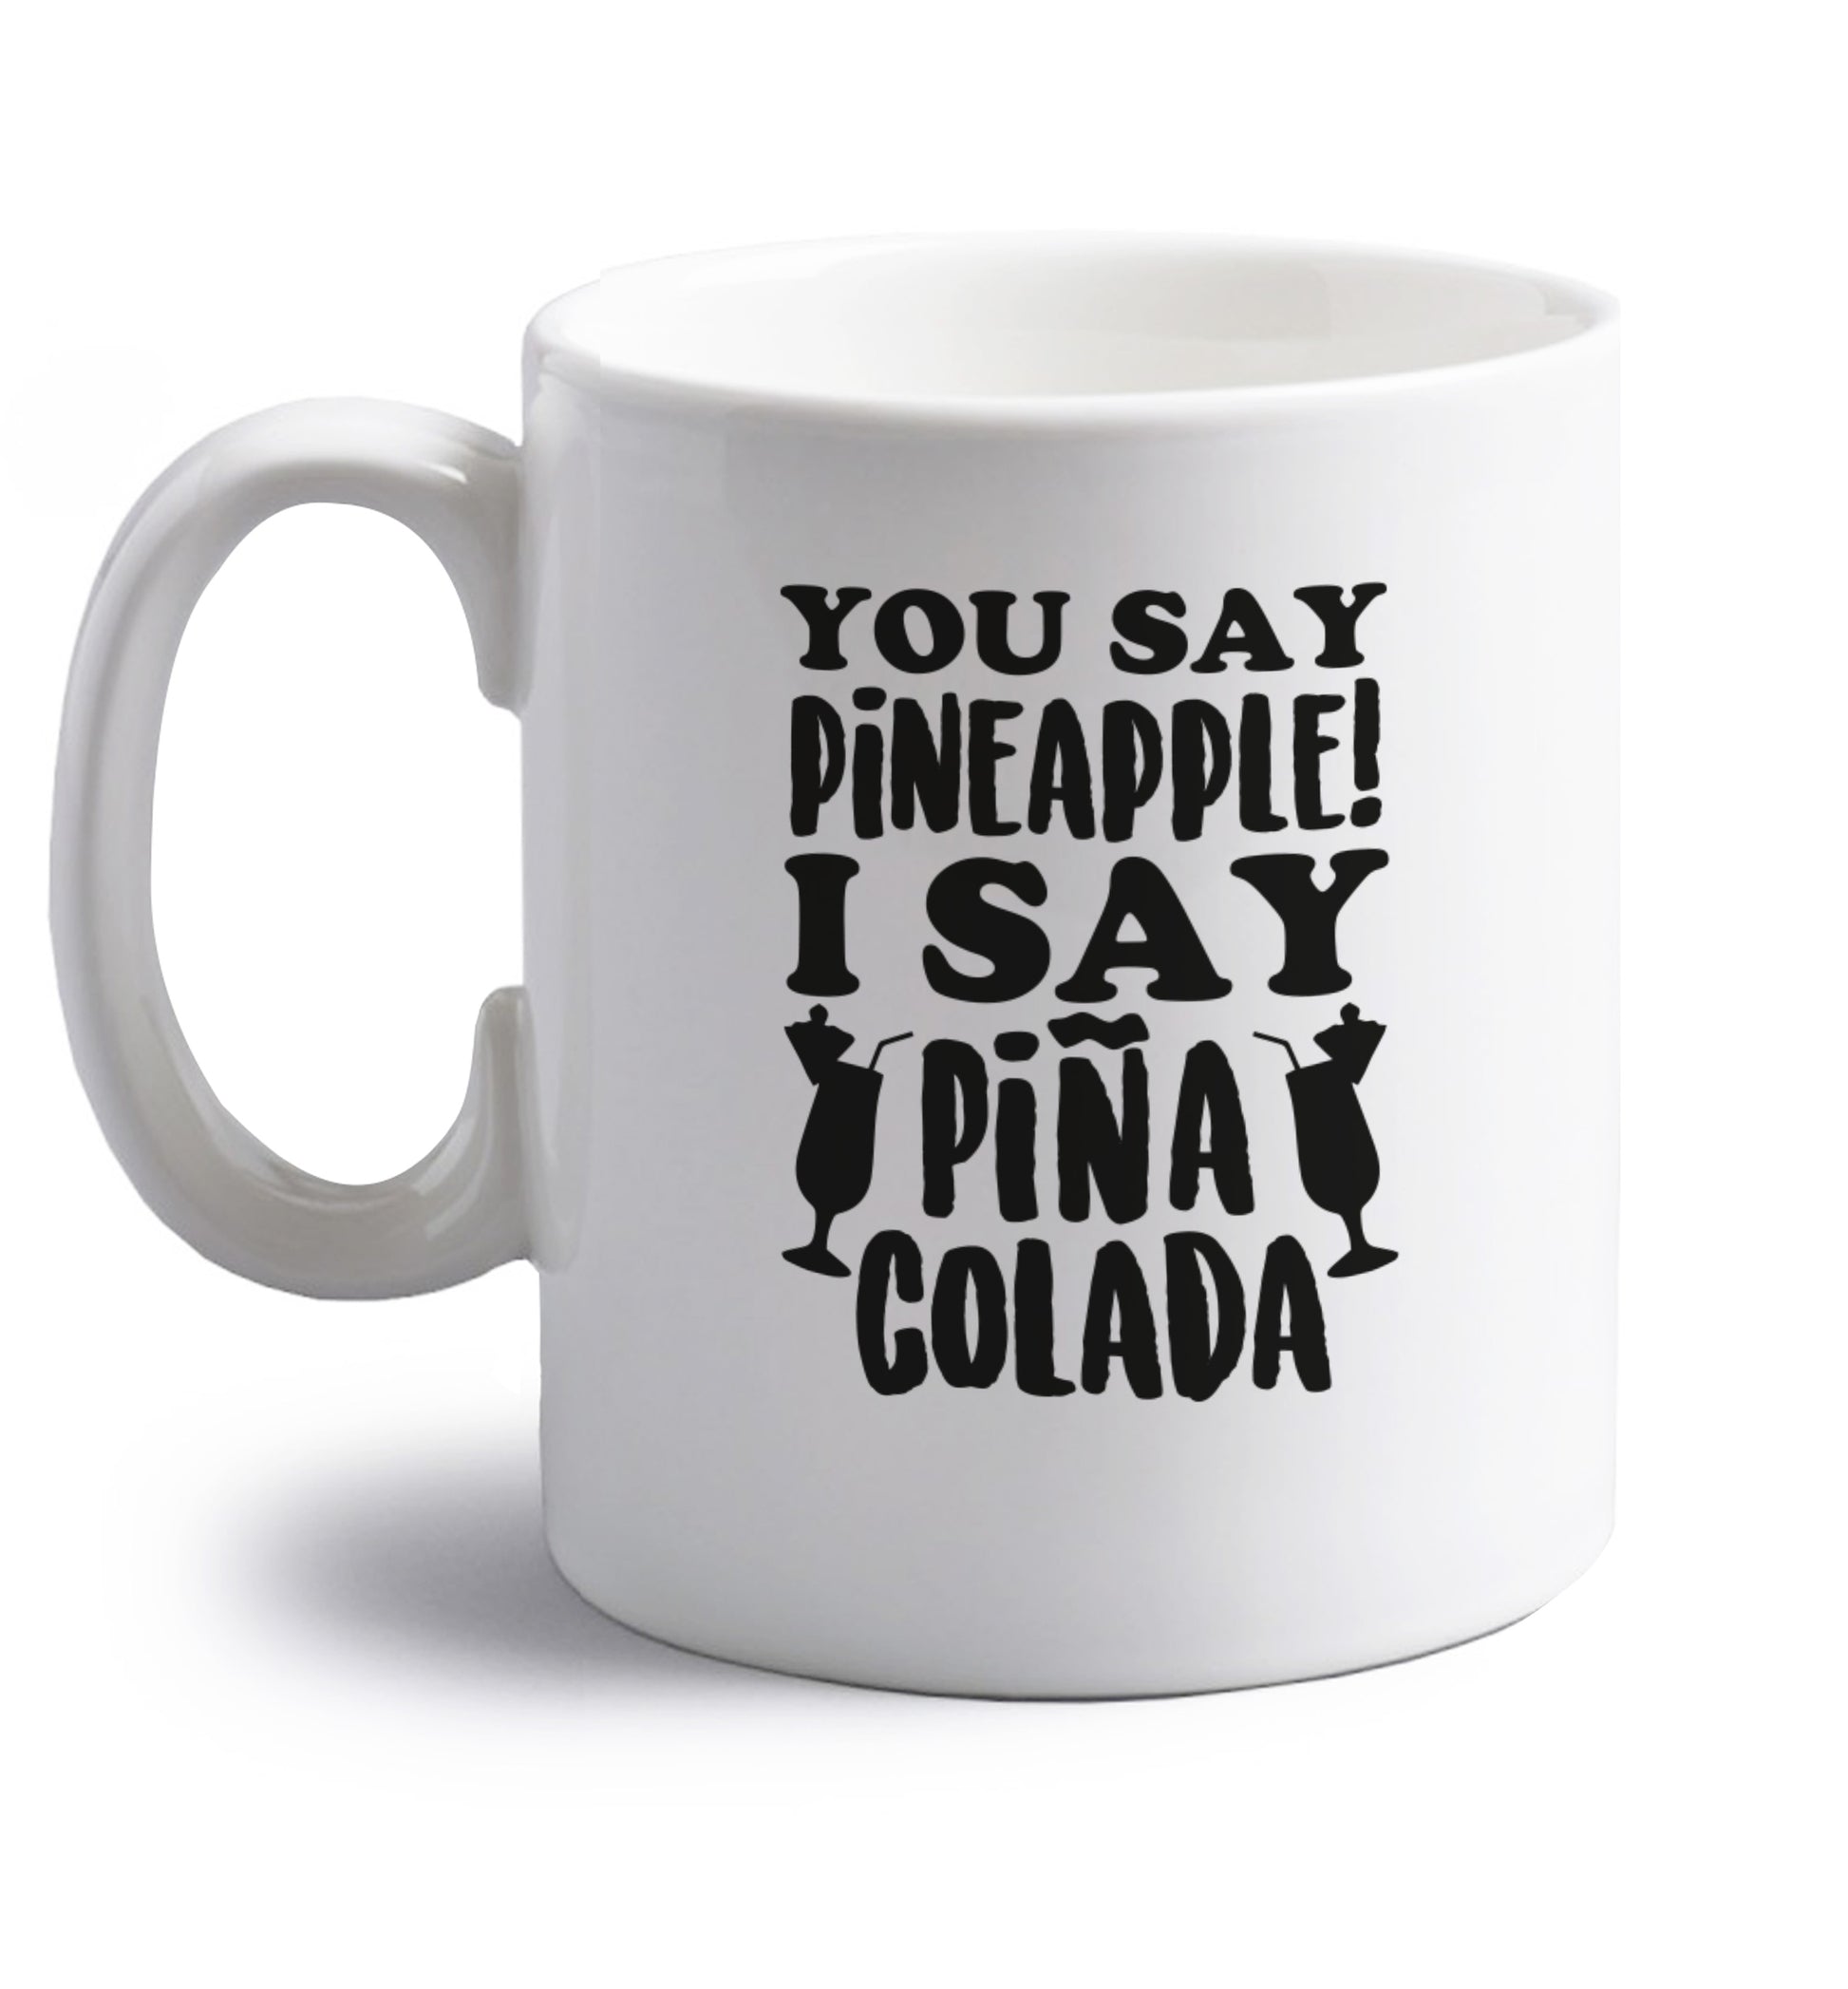 You say pinapple I say Pina colada right handed white ceramic mug 